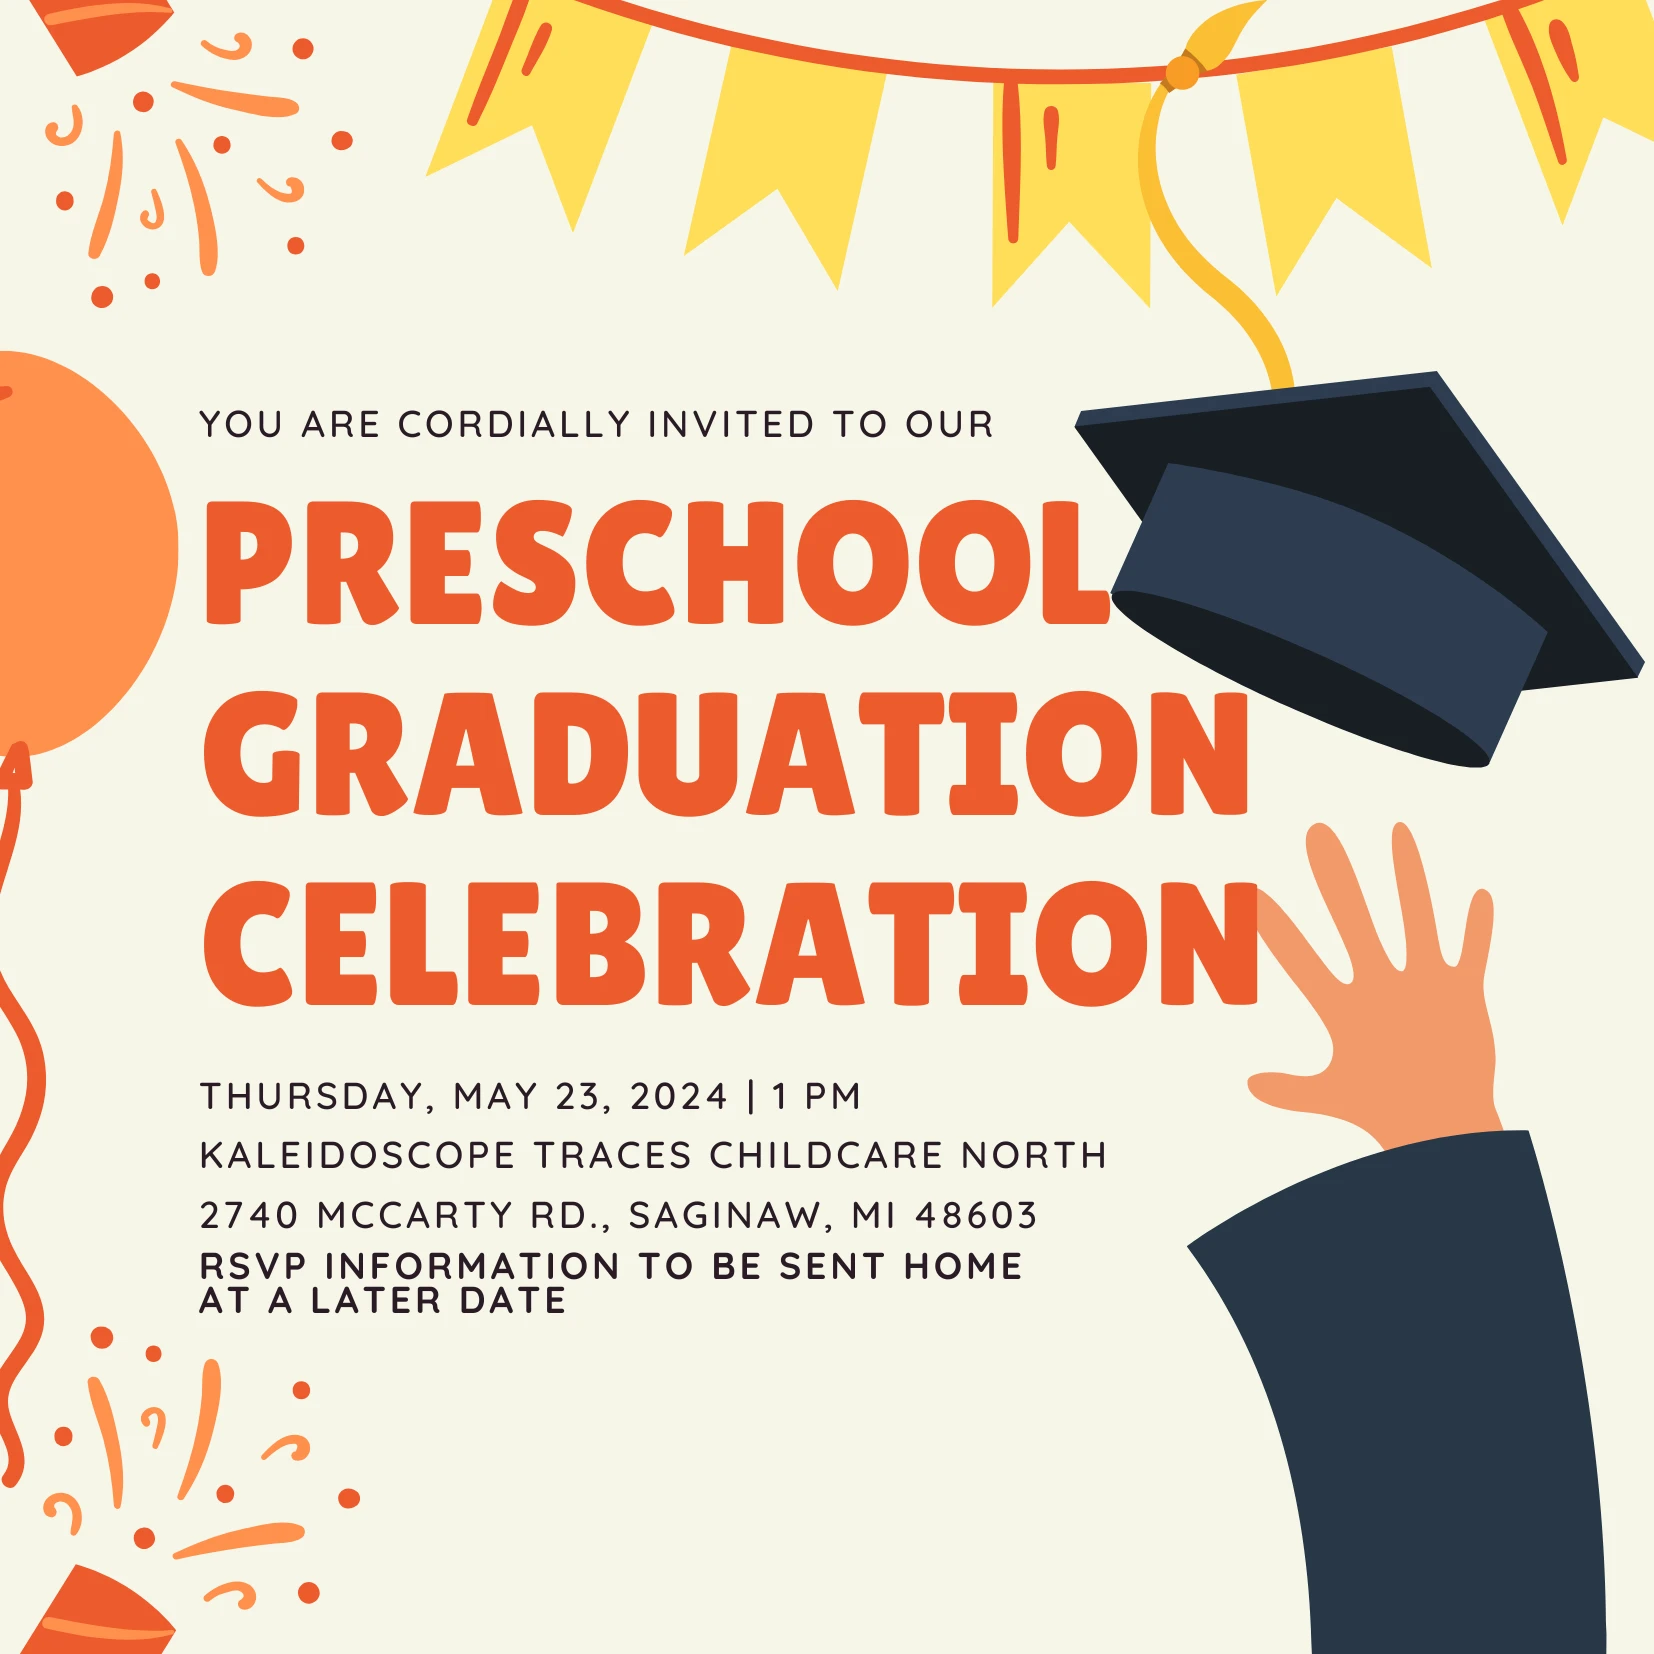 662-preschool-graduation-celebration-3-17145296674702.png